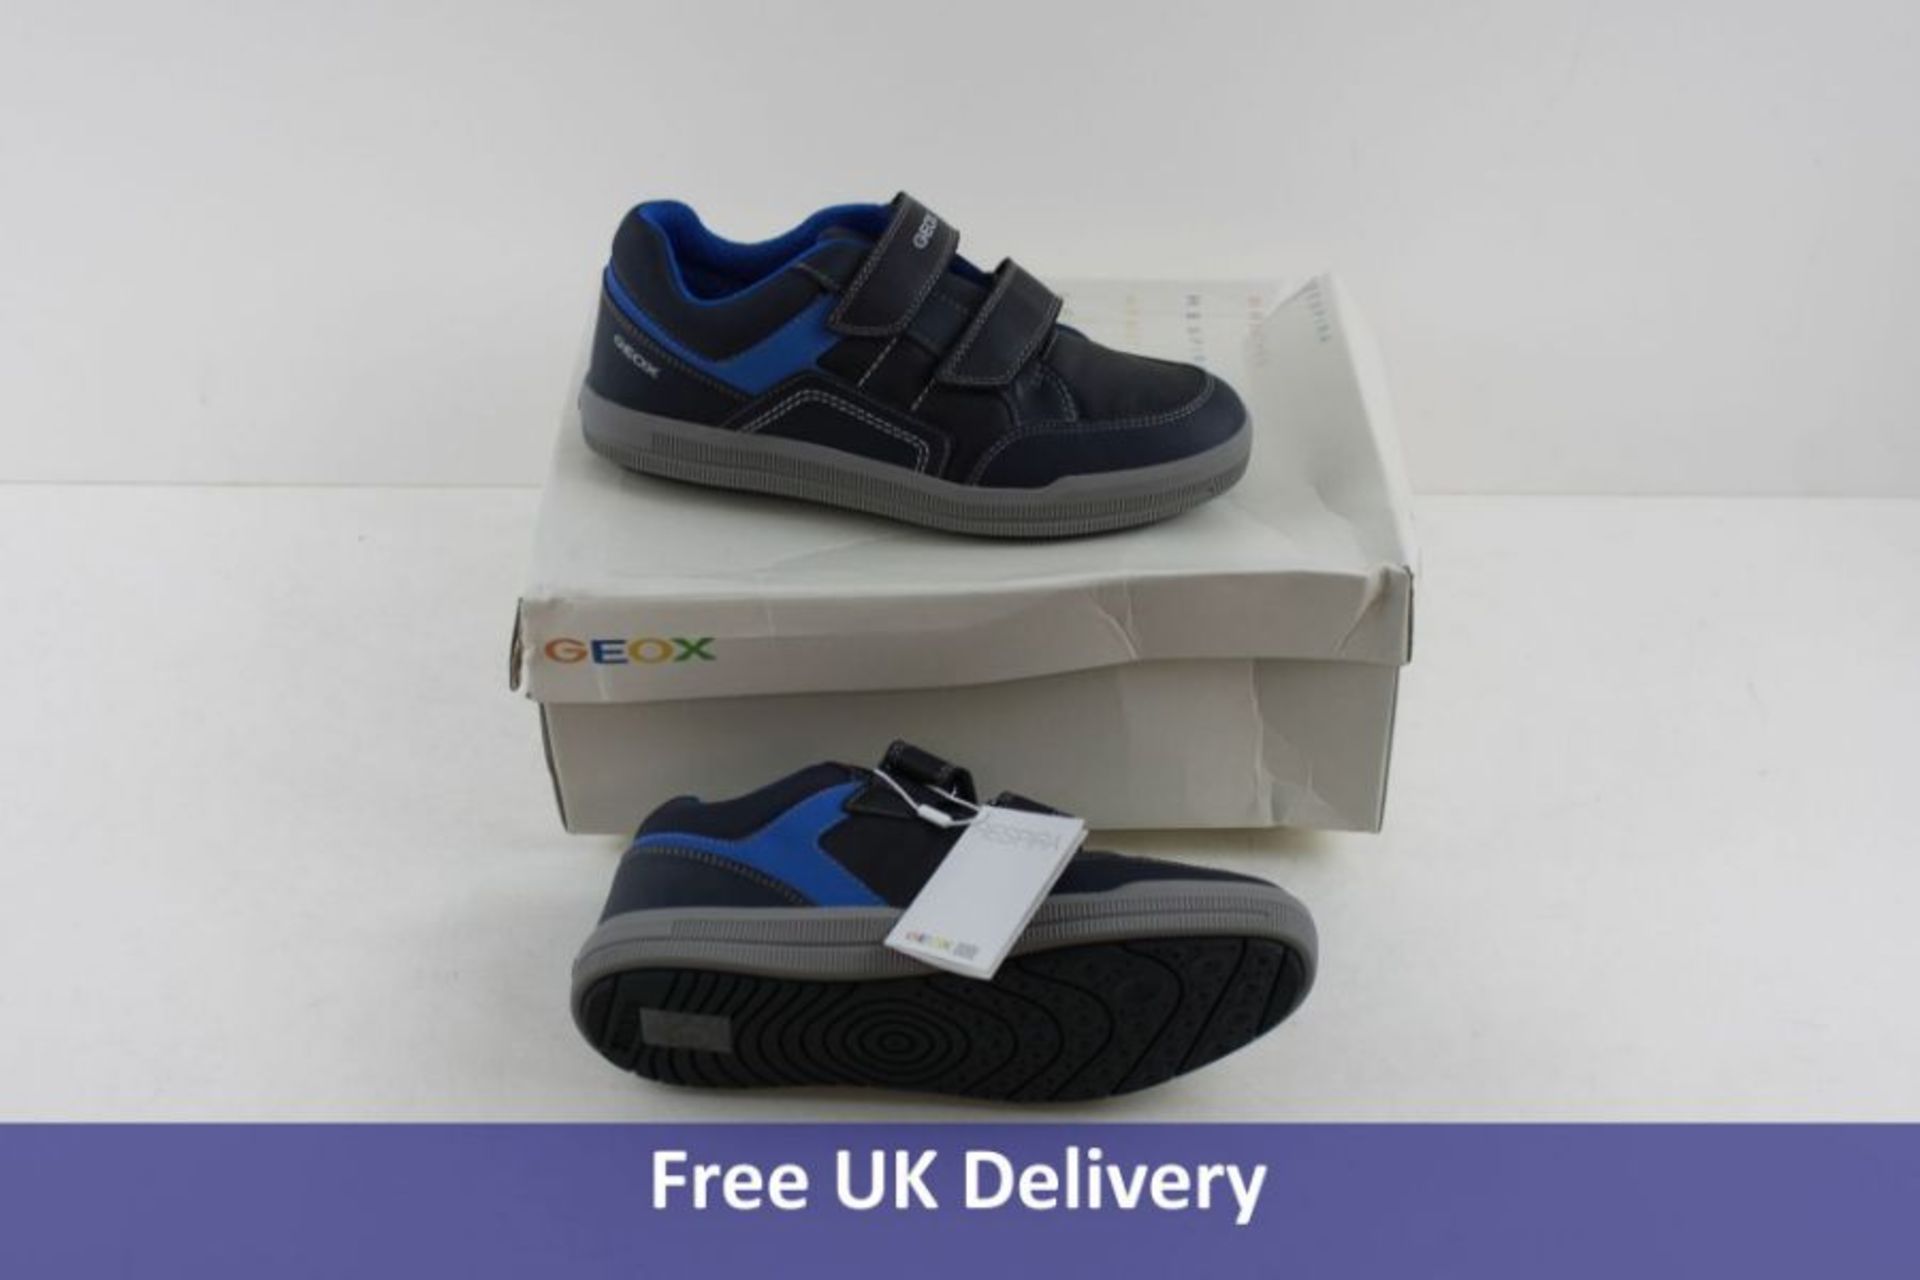 Geox Poseido Boy's Shoes, Navy and Grey, UK 4. Box damaged